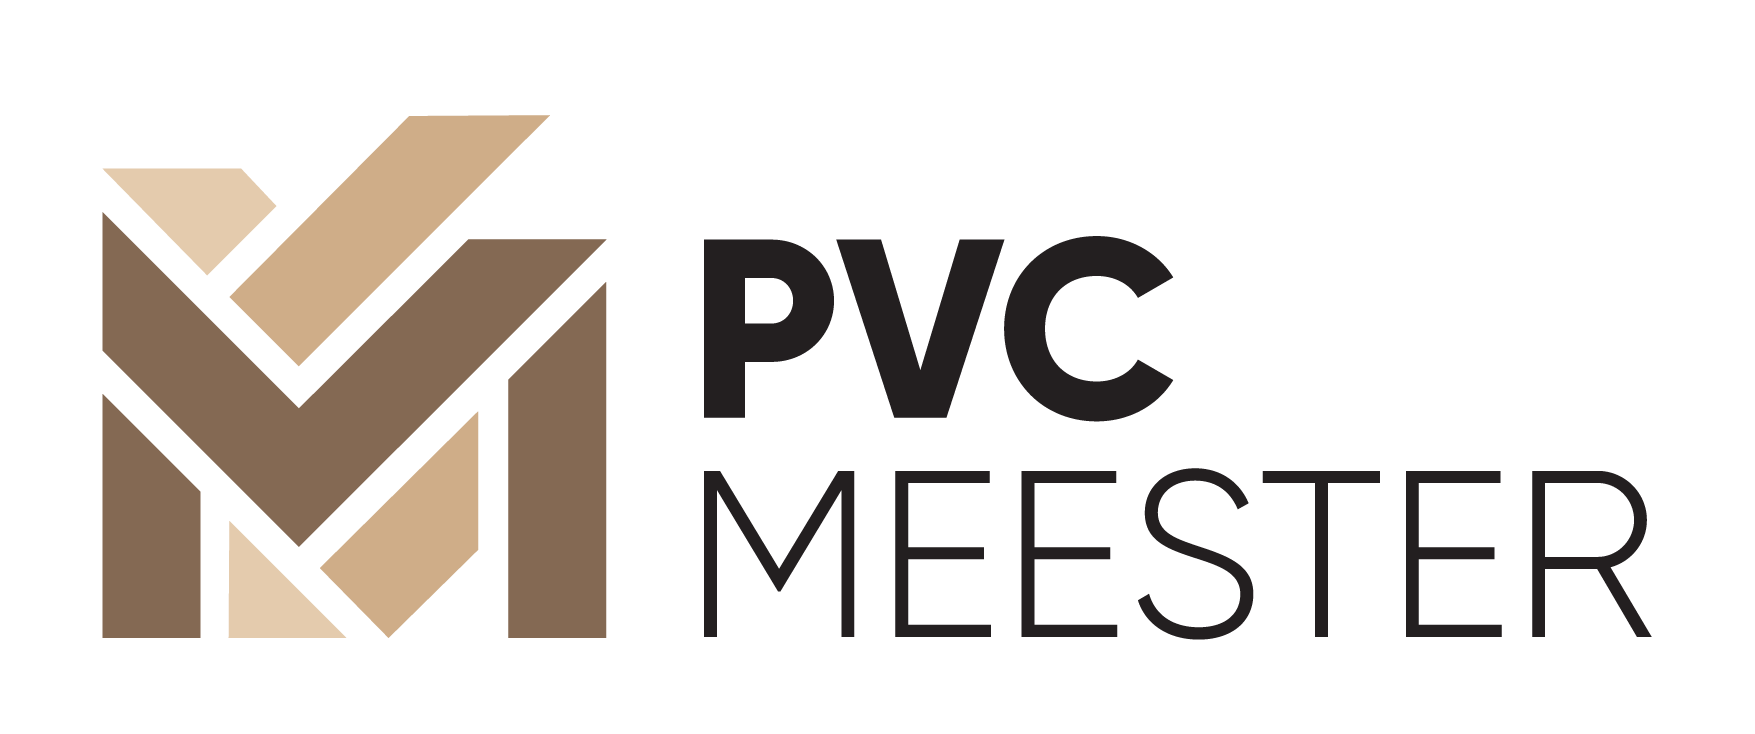 PVC Meester